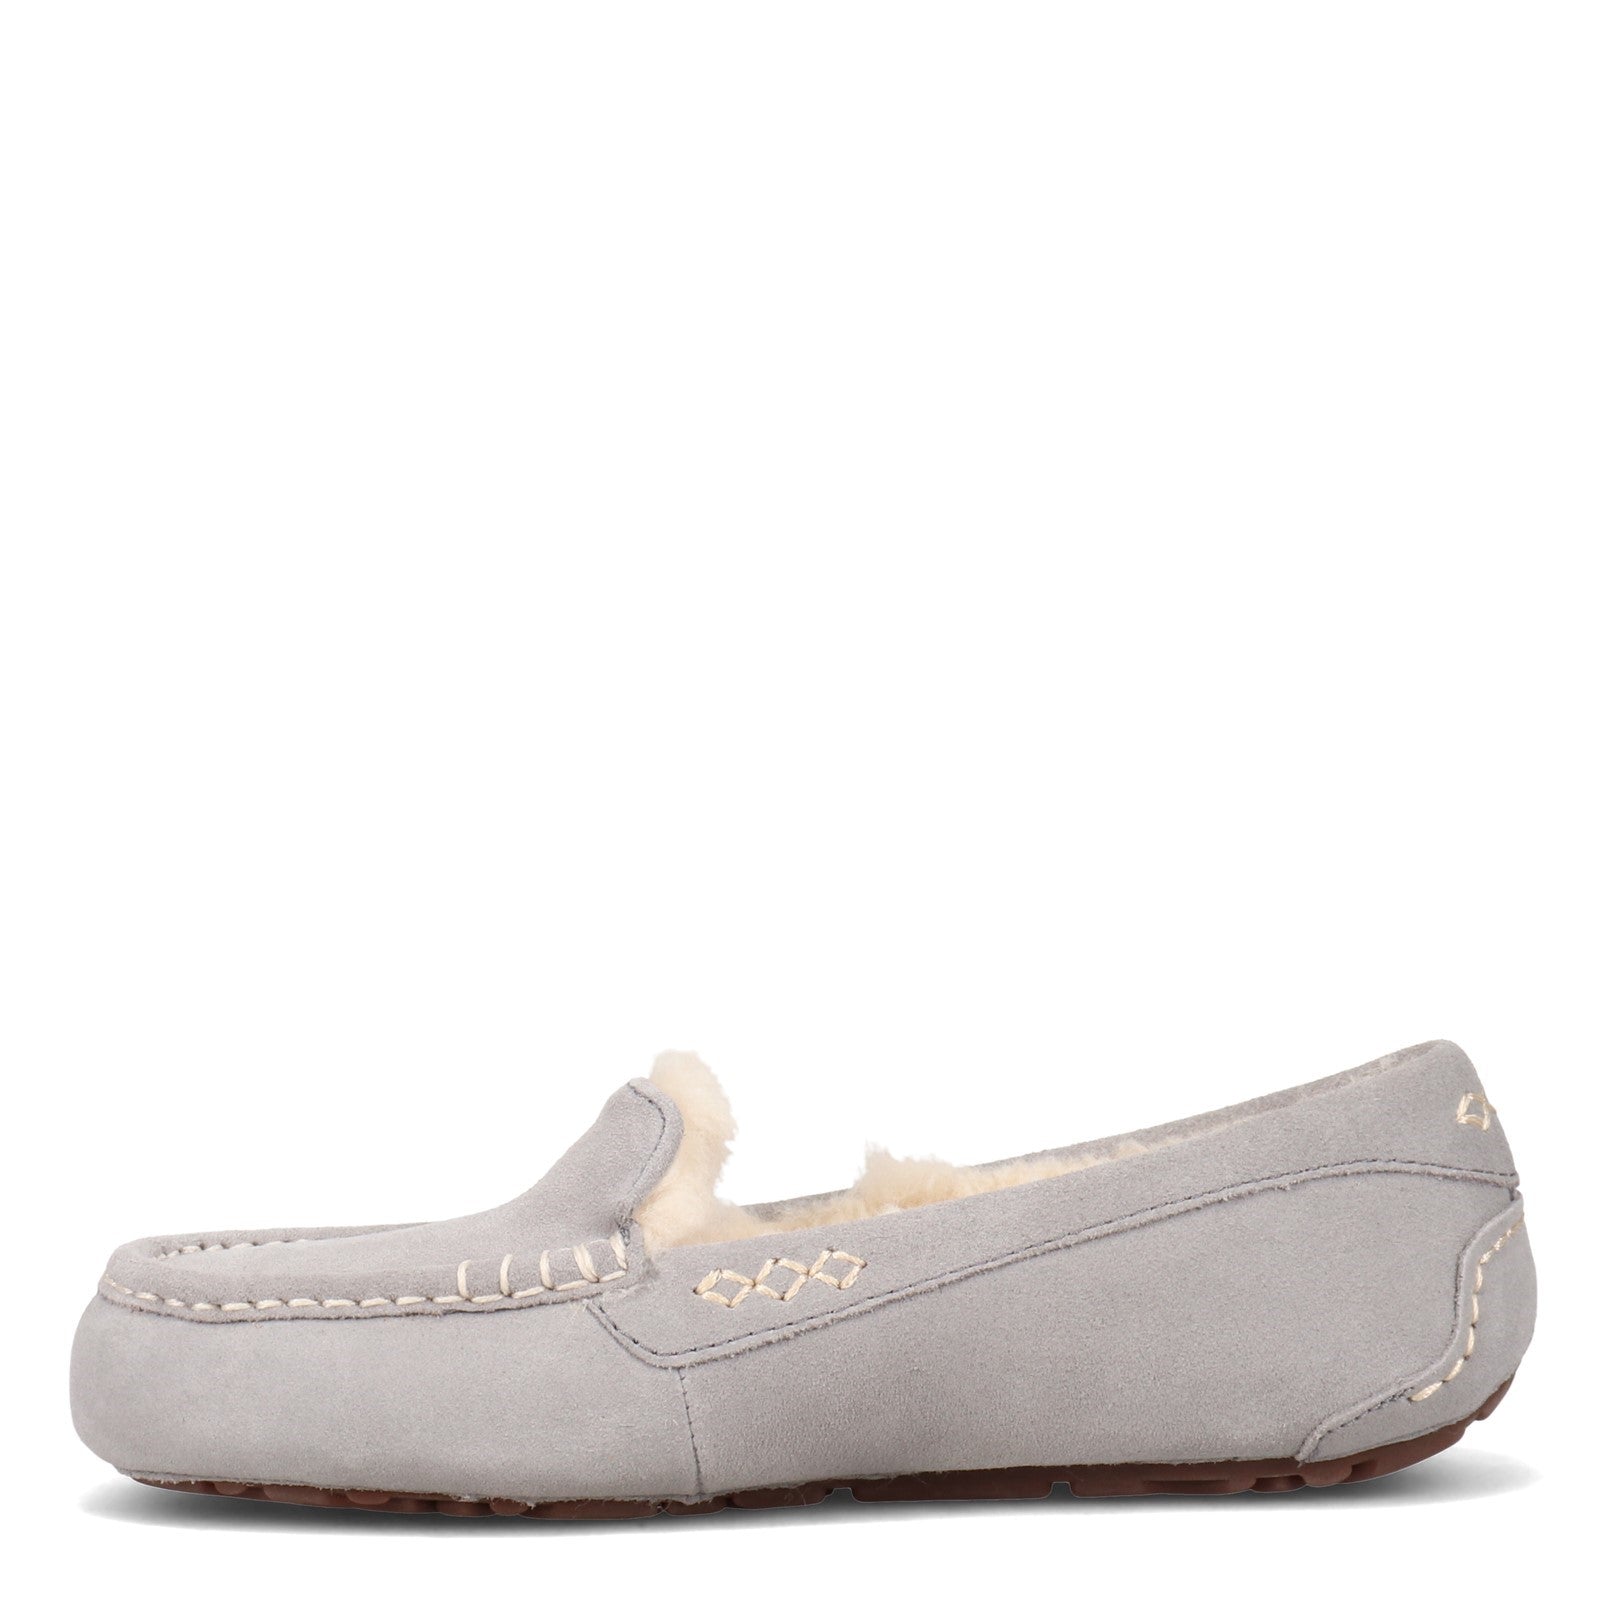 Women's Shoes UGG ANSLEY Suede Indoor/Outdoor Moccasin Slippers 1106878  CHESTNUT | eBay